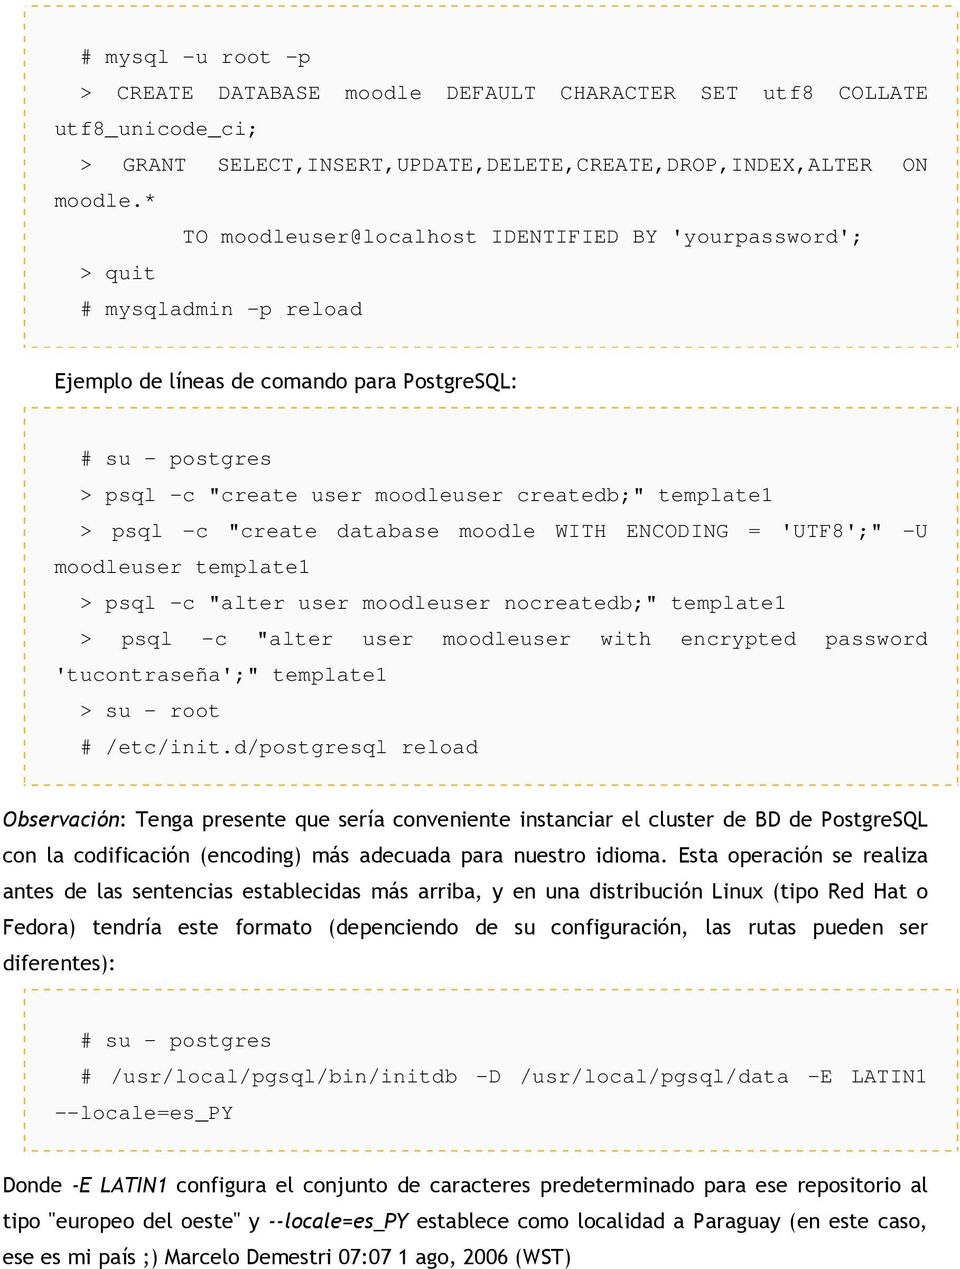 template1 > psql -c "create database moodle WITH ENCODING = 'UTF8';" -U moodleuser template1 > psql -c "alter user moodleuser nocreatedb;" template1 > psql -c "alter user moodleuser with encrypted